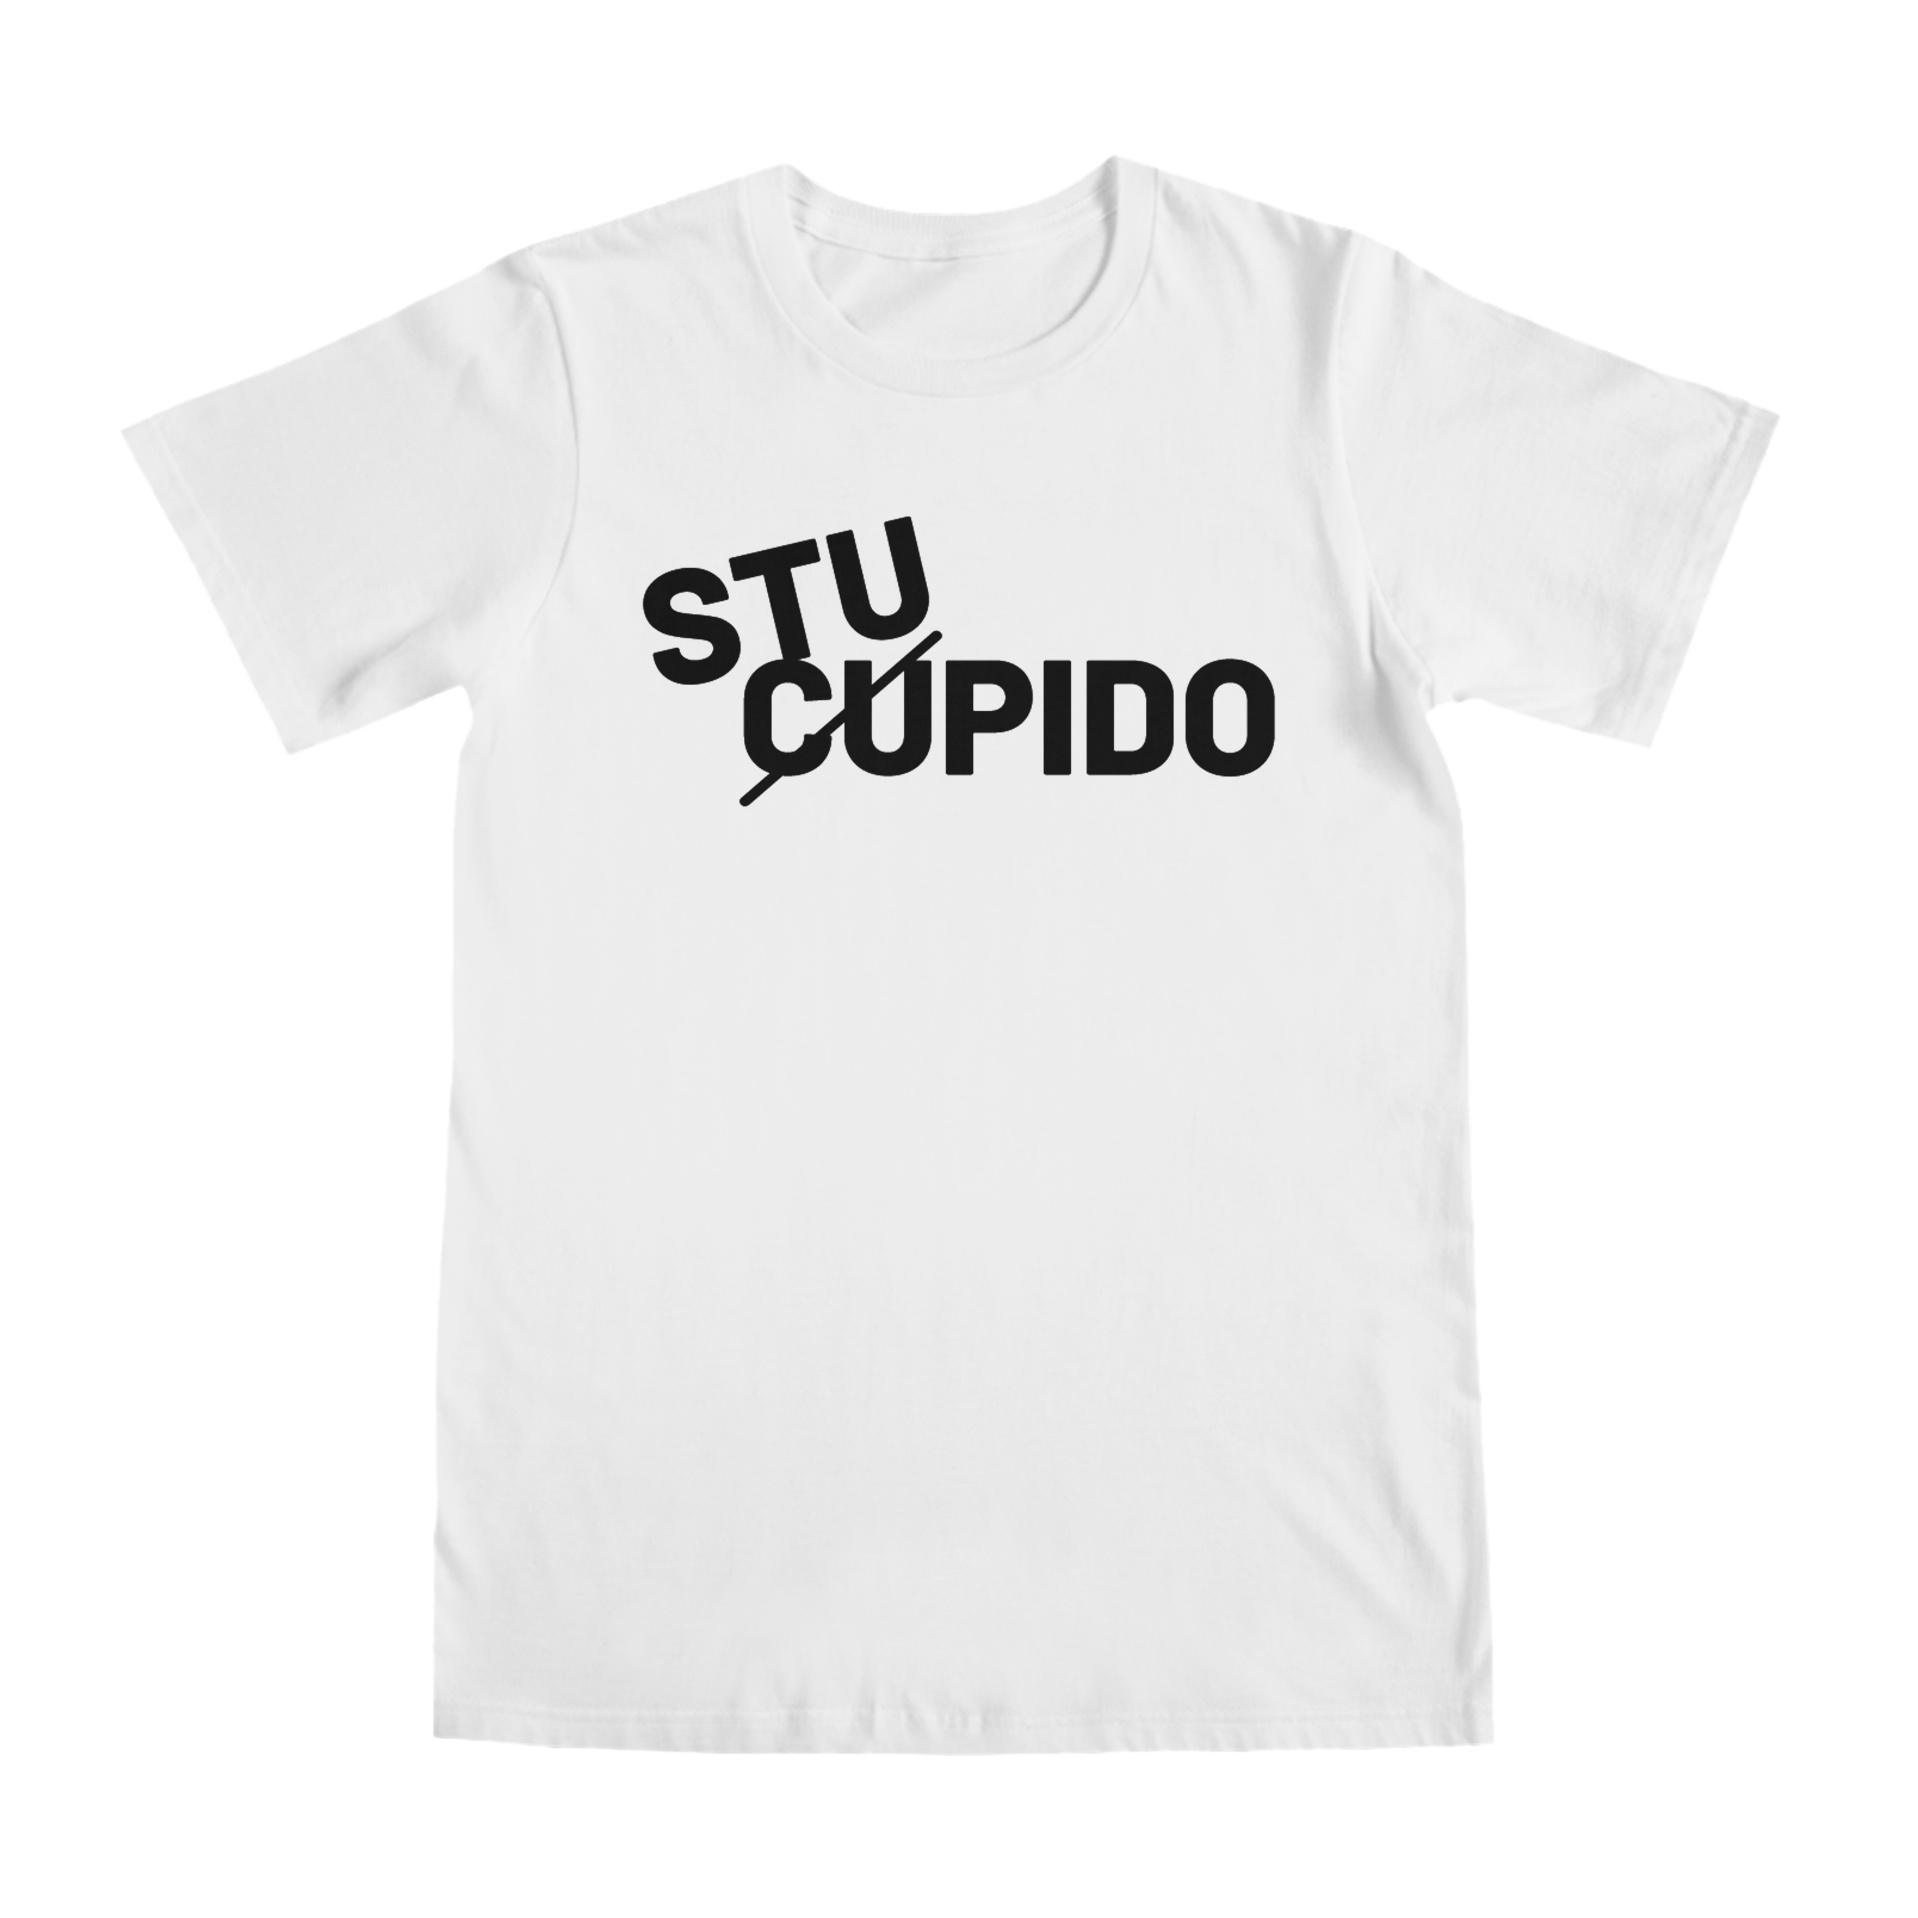 STU-CUPIDO